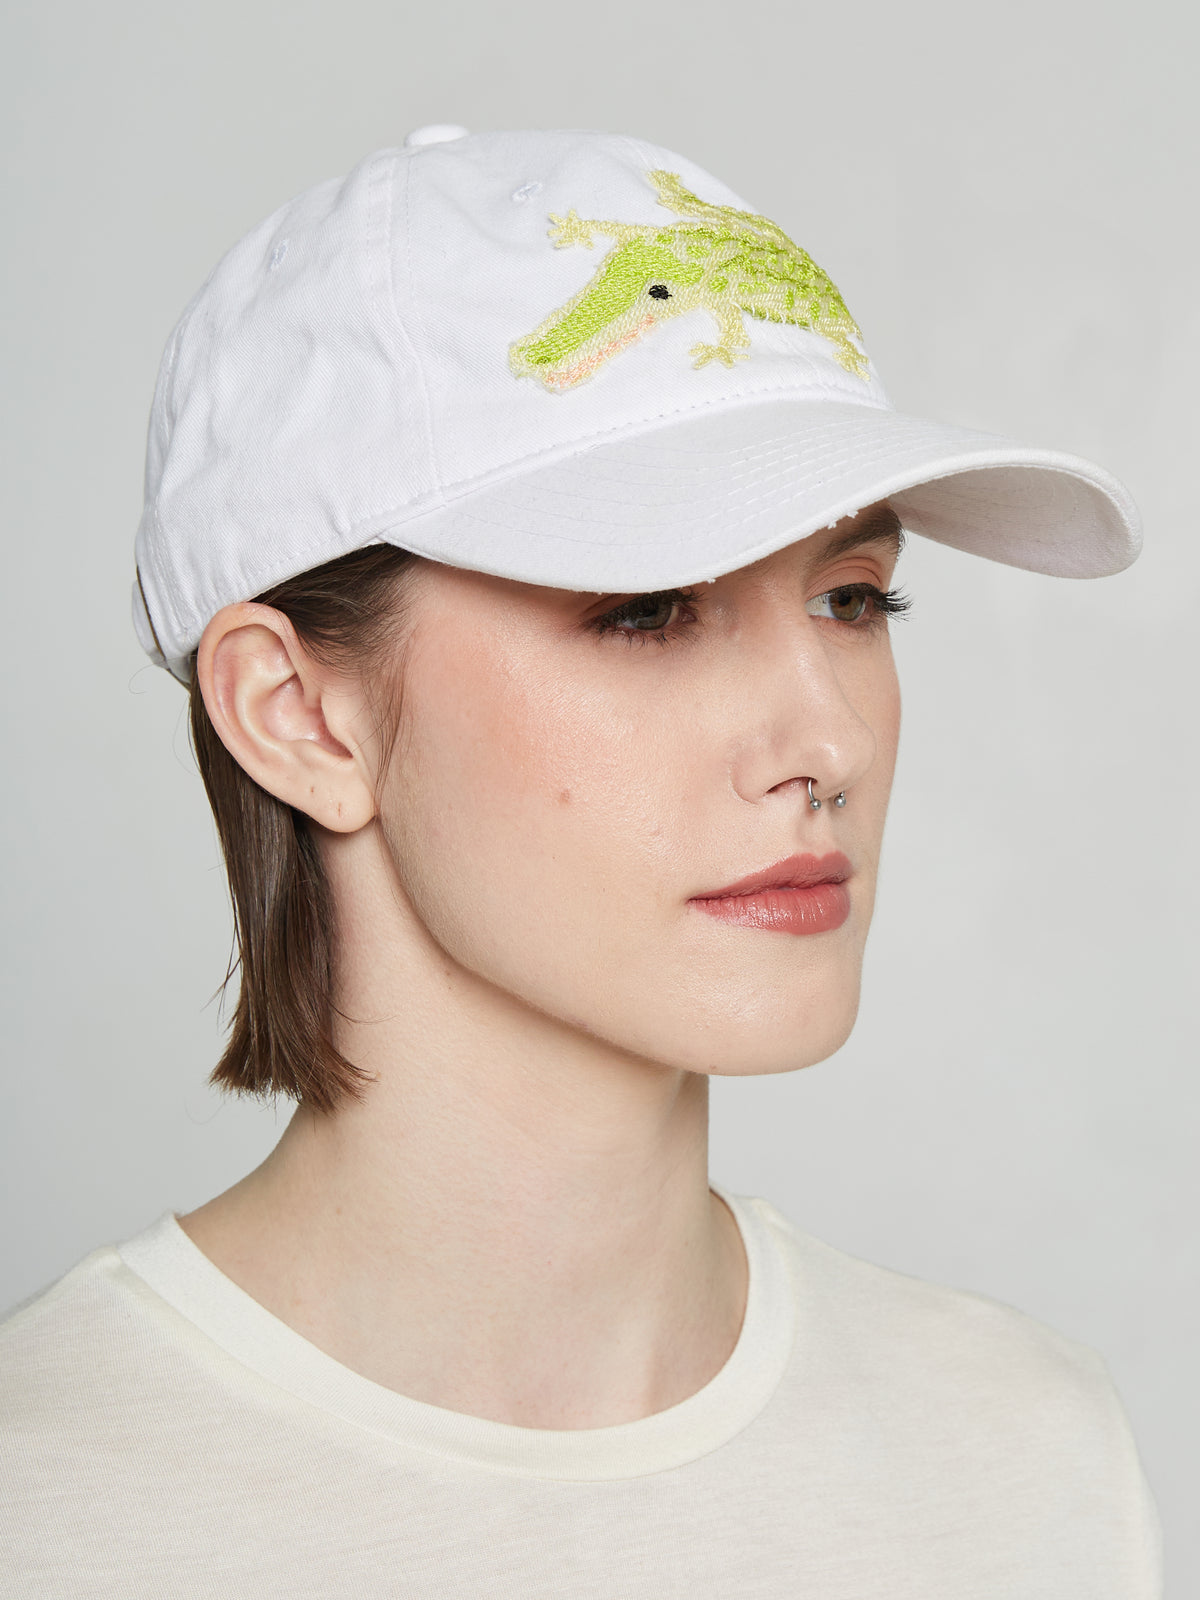 Embroidered Croc Cap